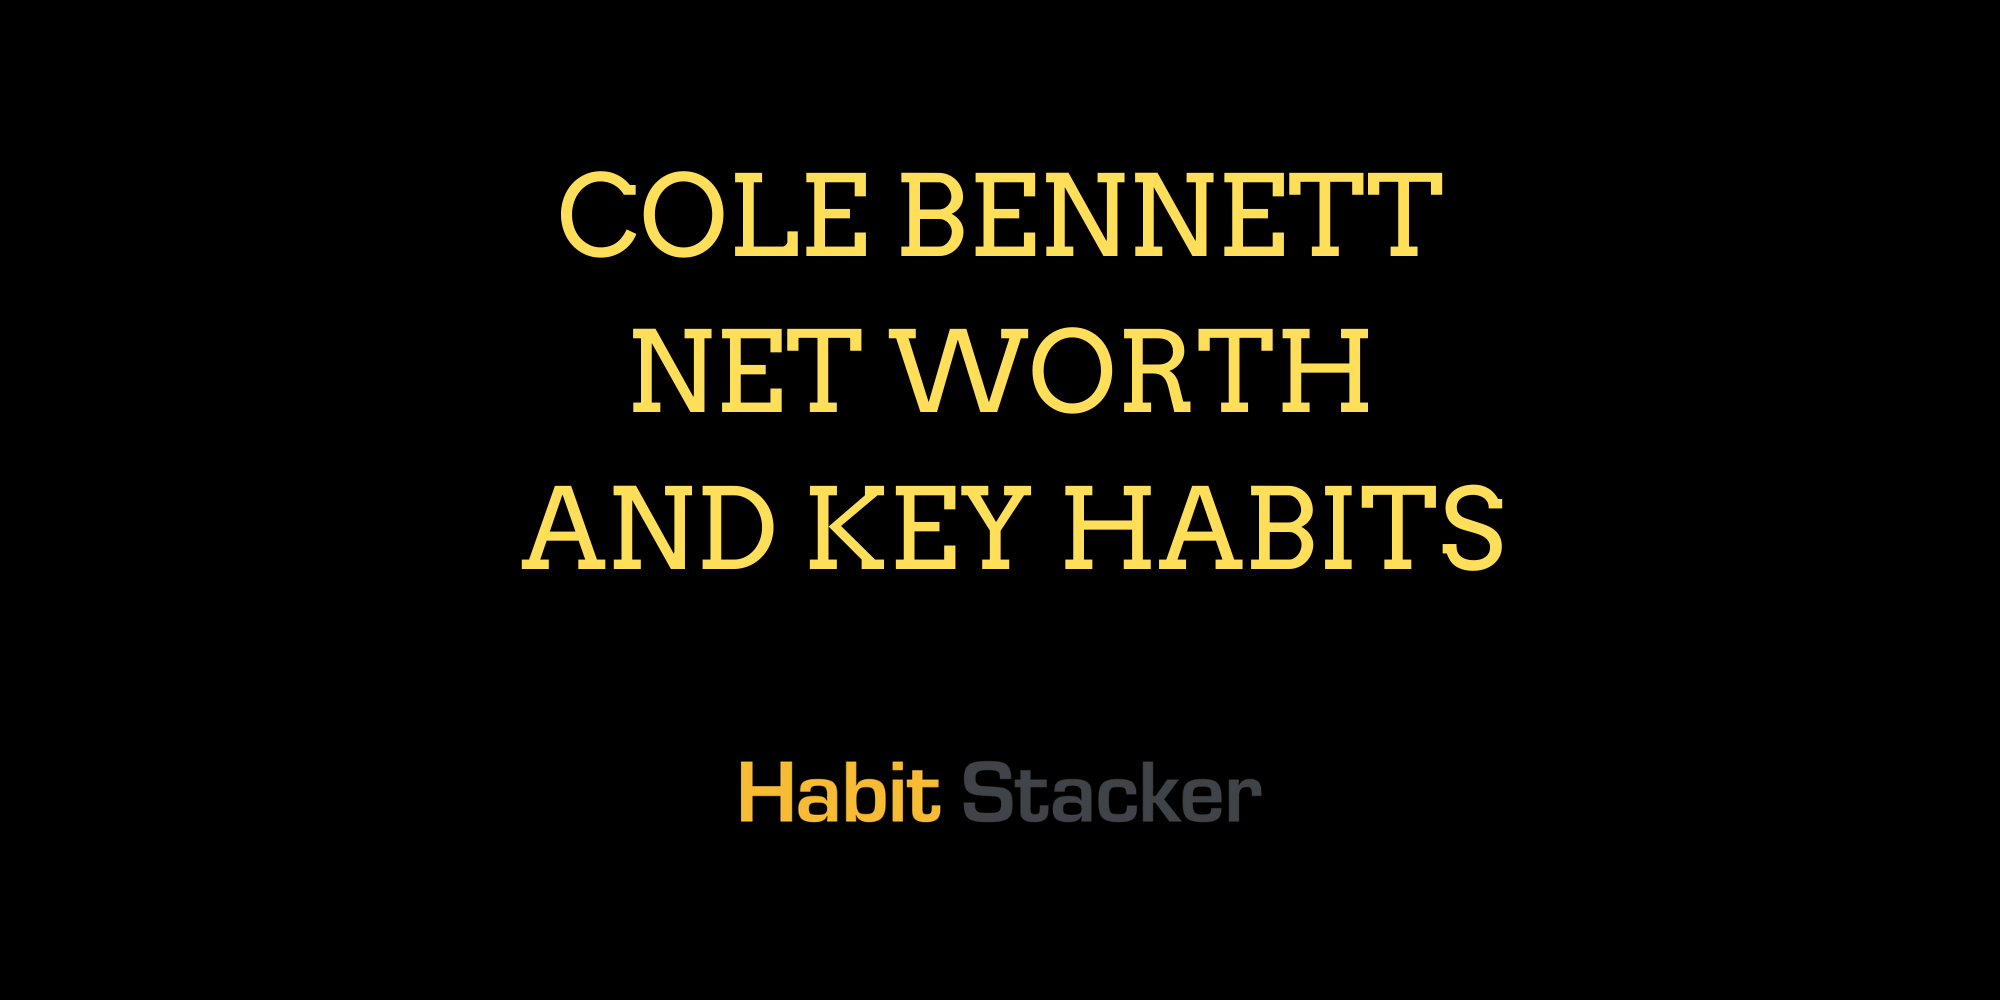 Cole Bennett Net Worth and Key Habits